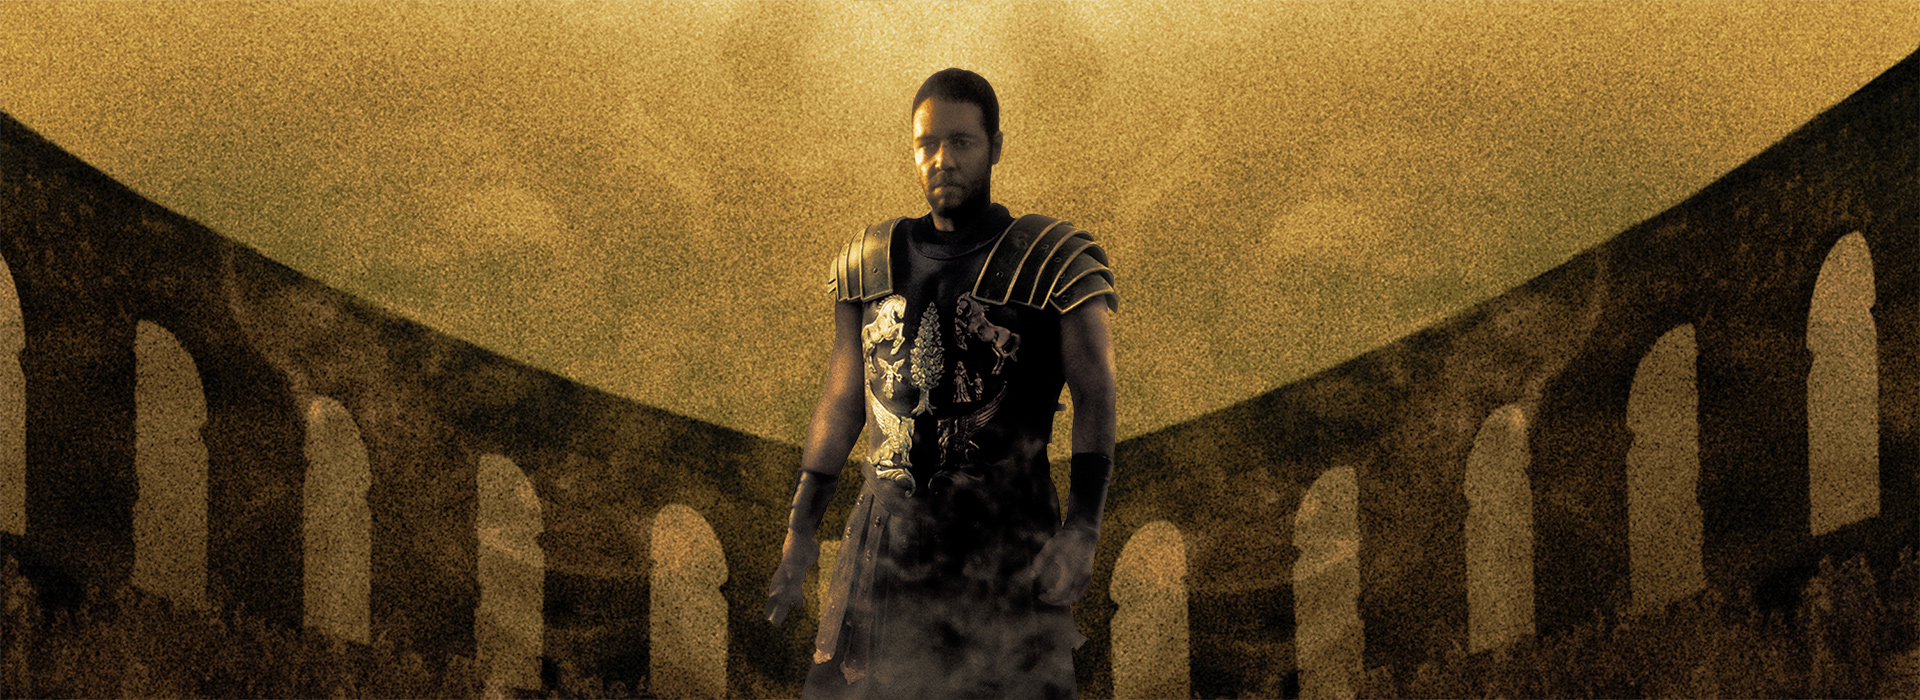 Movie poster Gladiator